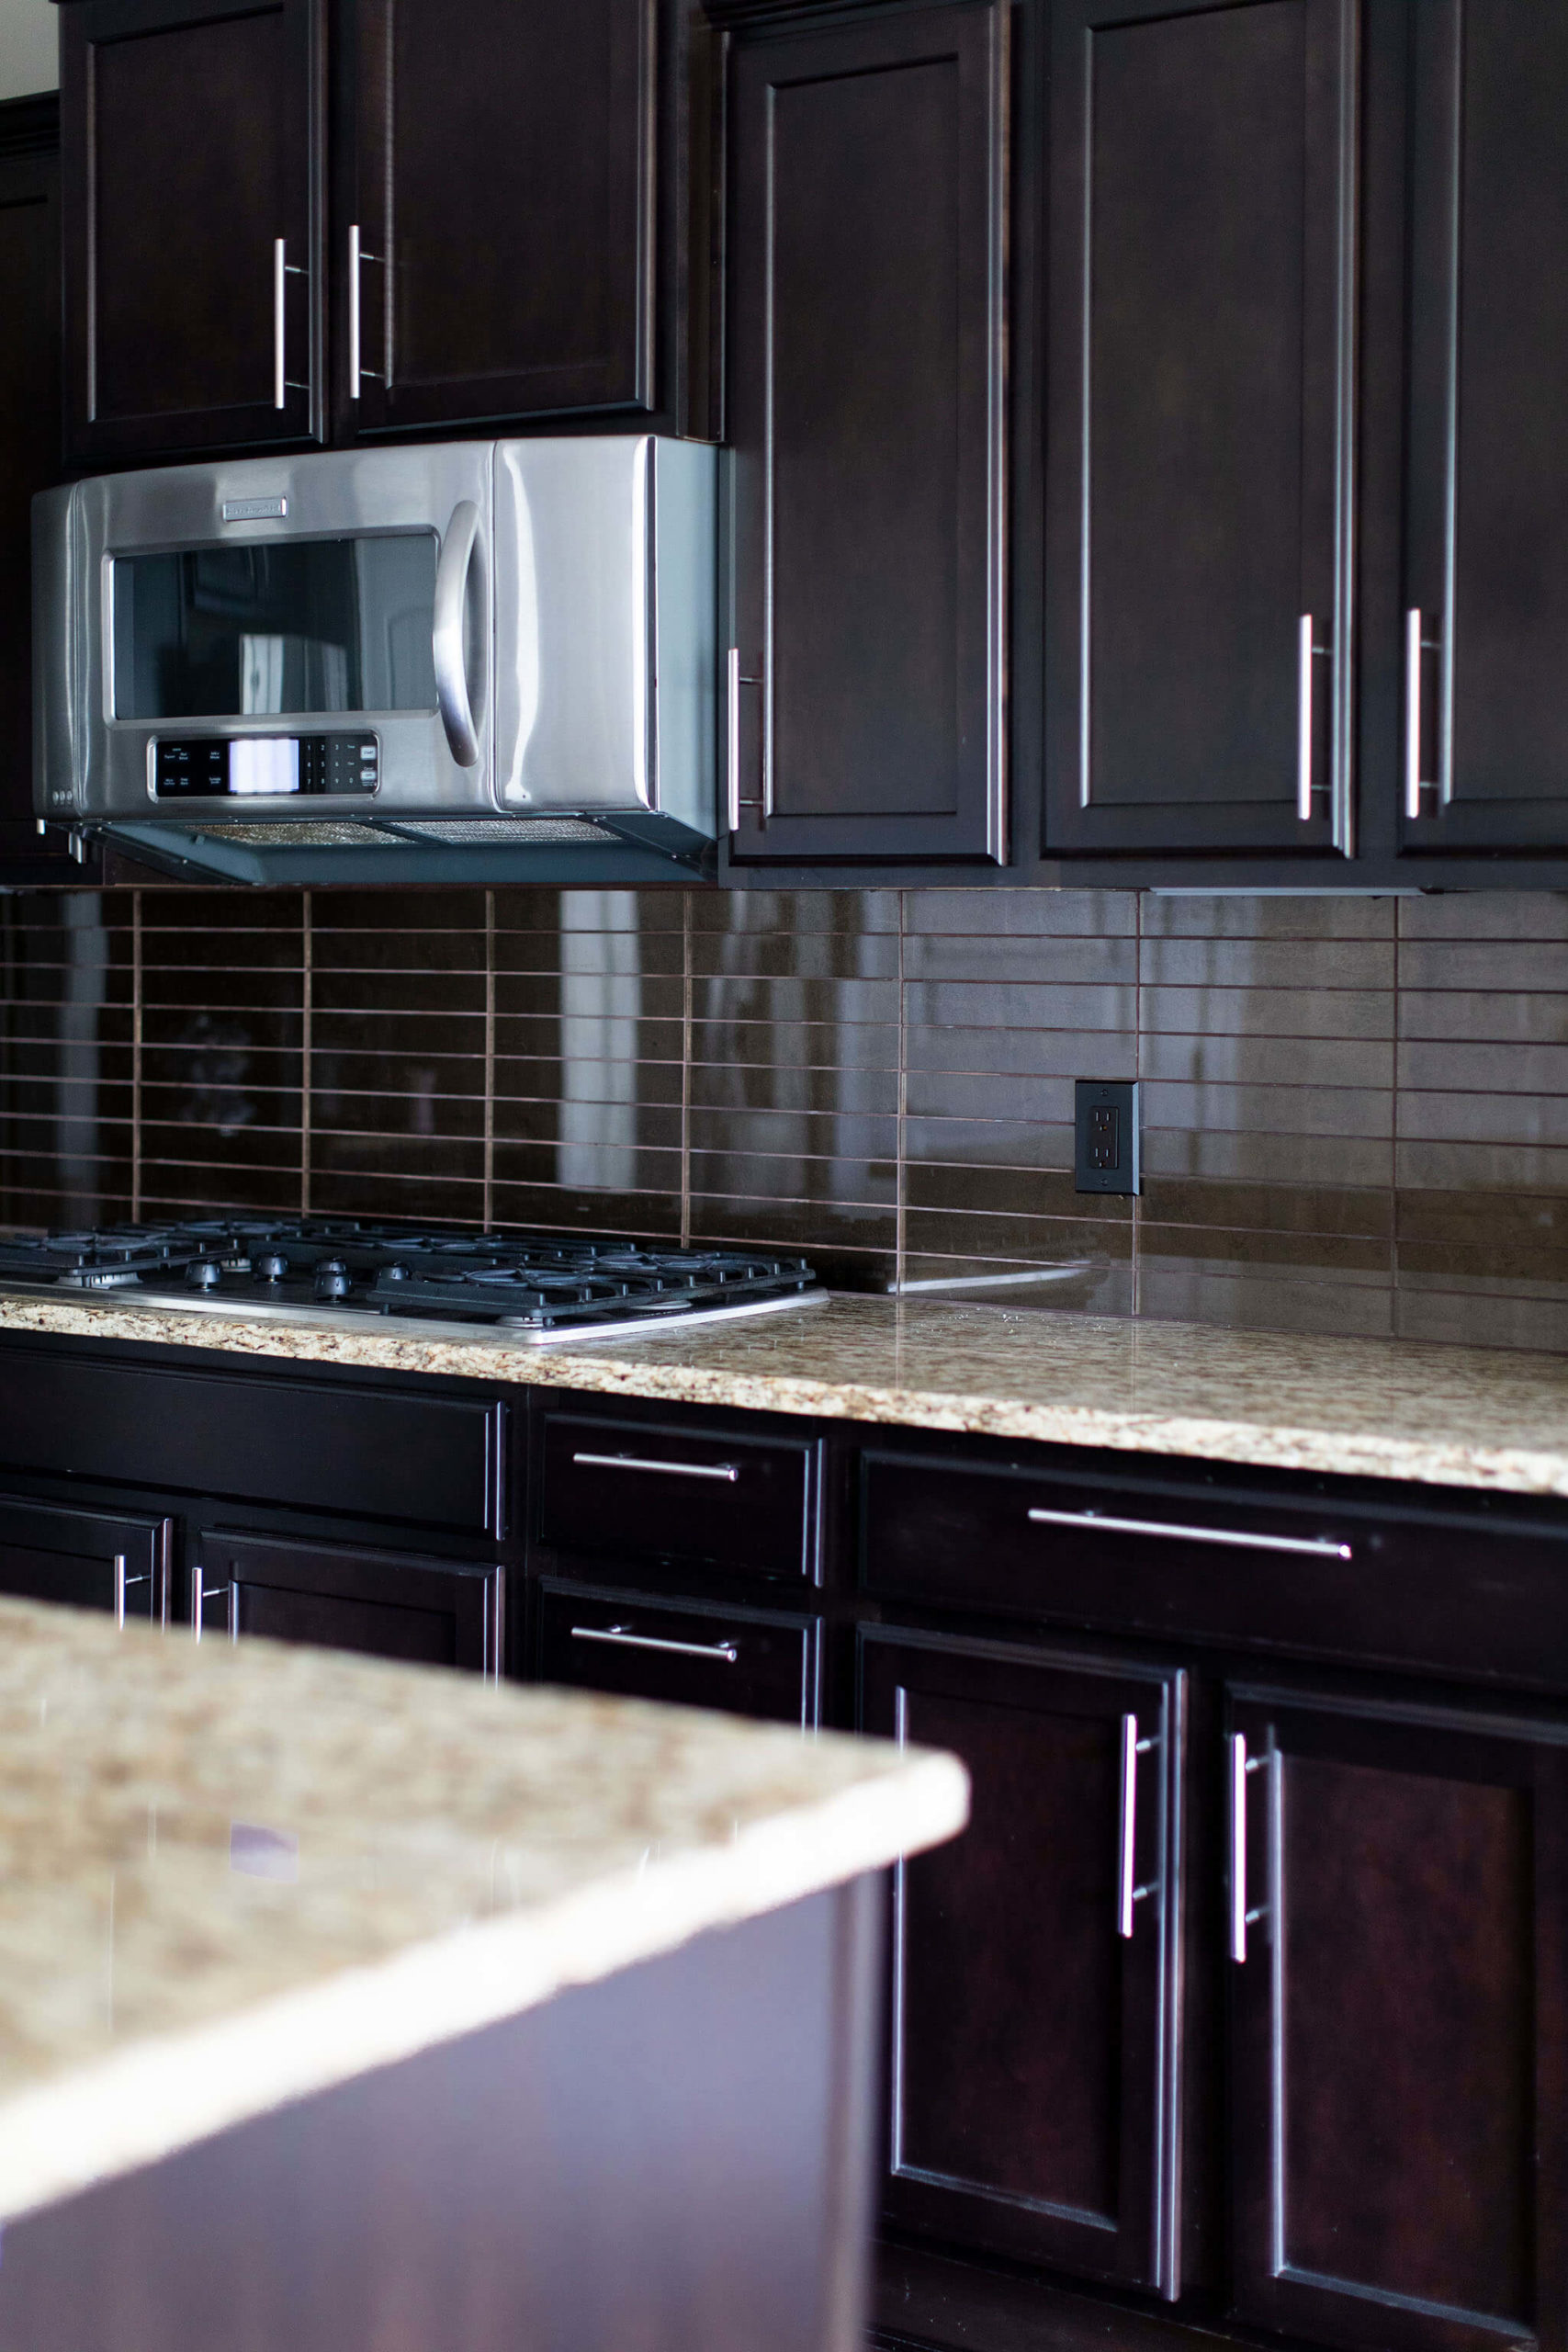 Kitchen After Photo Ann Sacks modern glass backsplash tile, dark grout color and oil-rubbed bronze outlets.